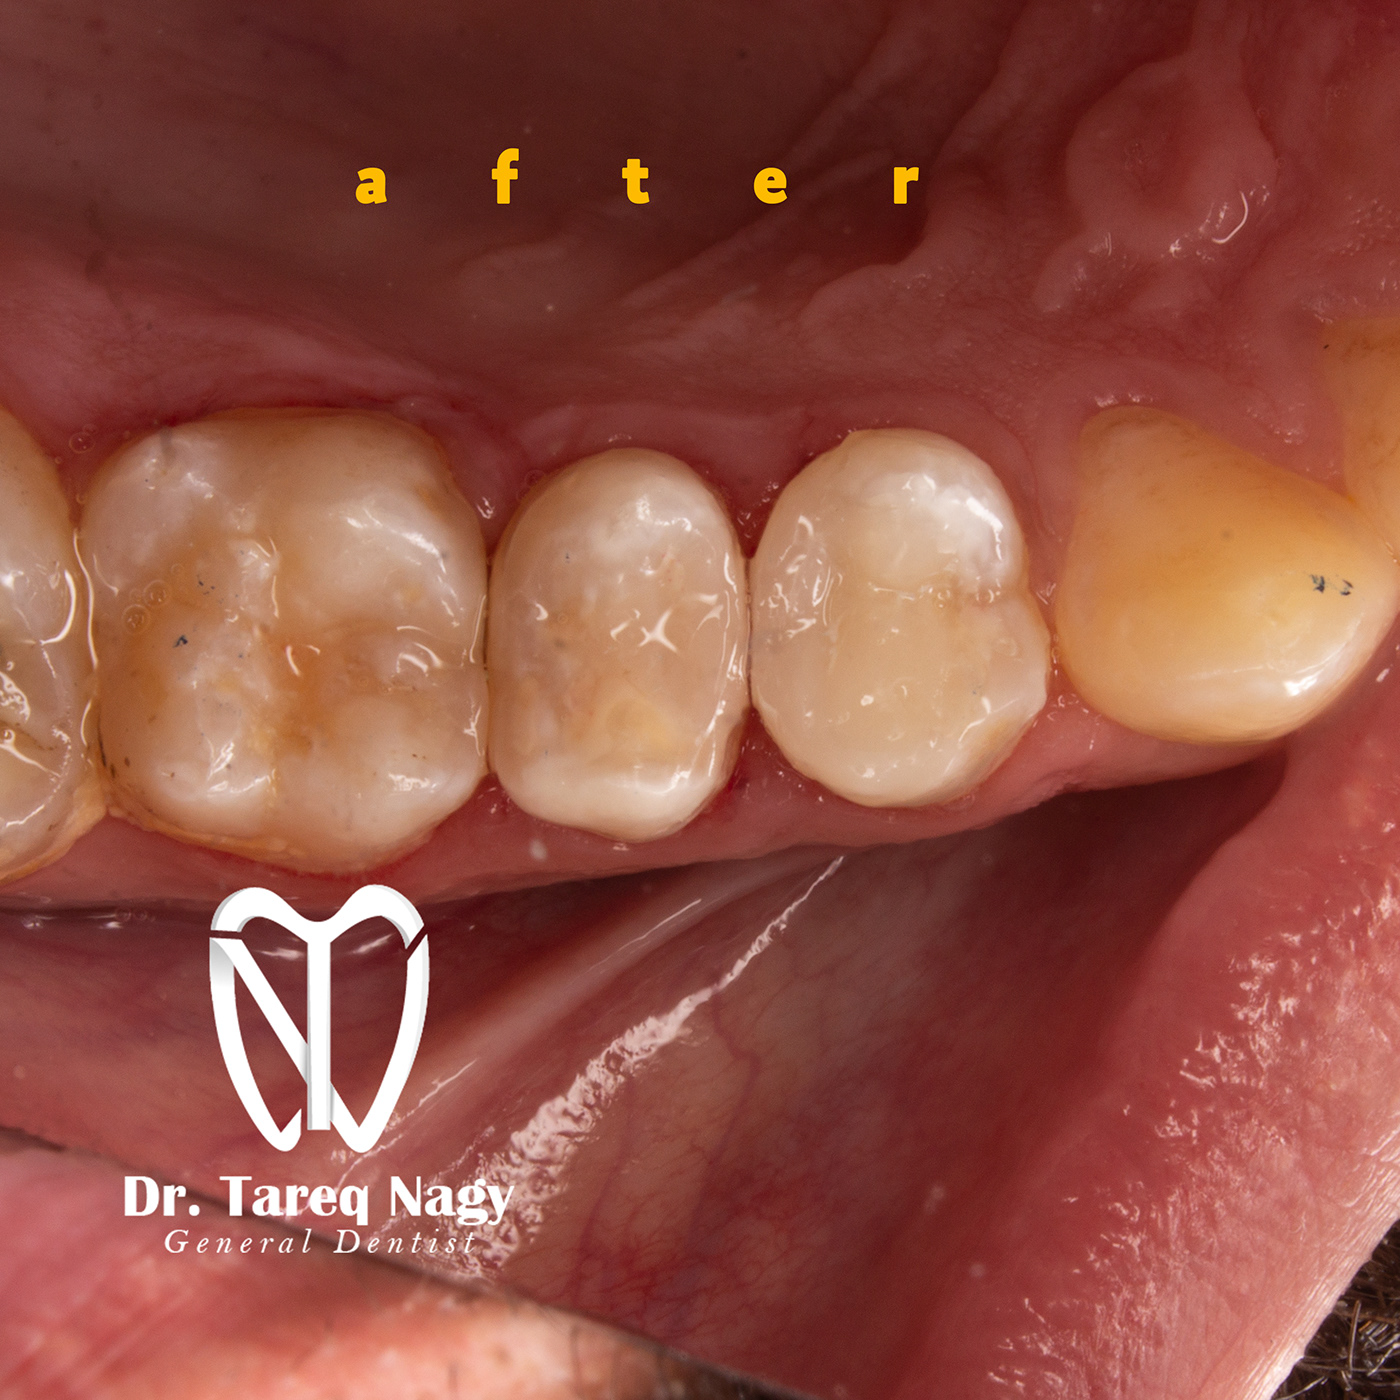 endodontics Composite Photography 